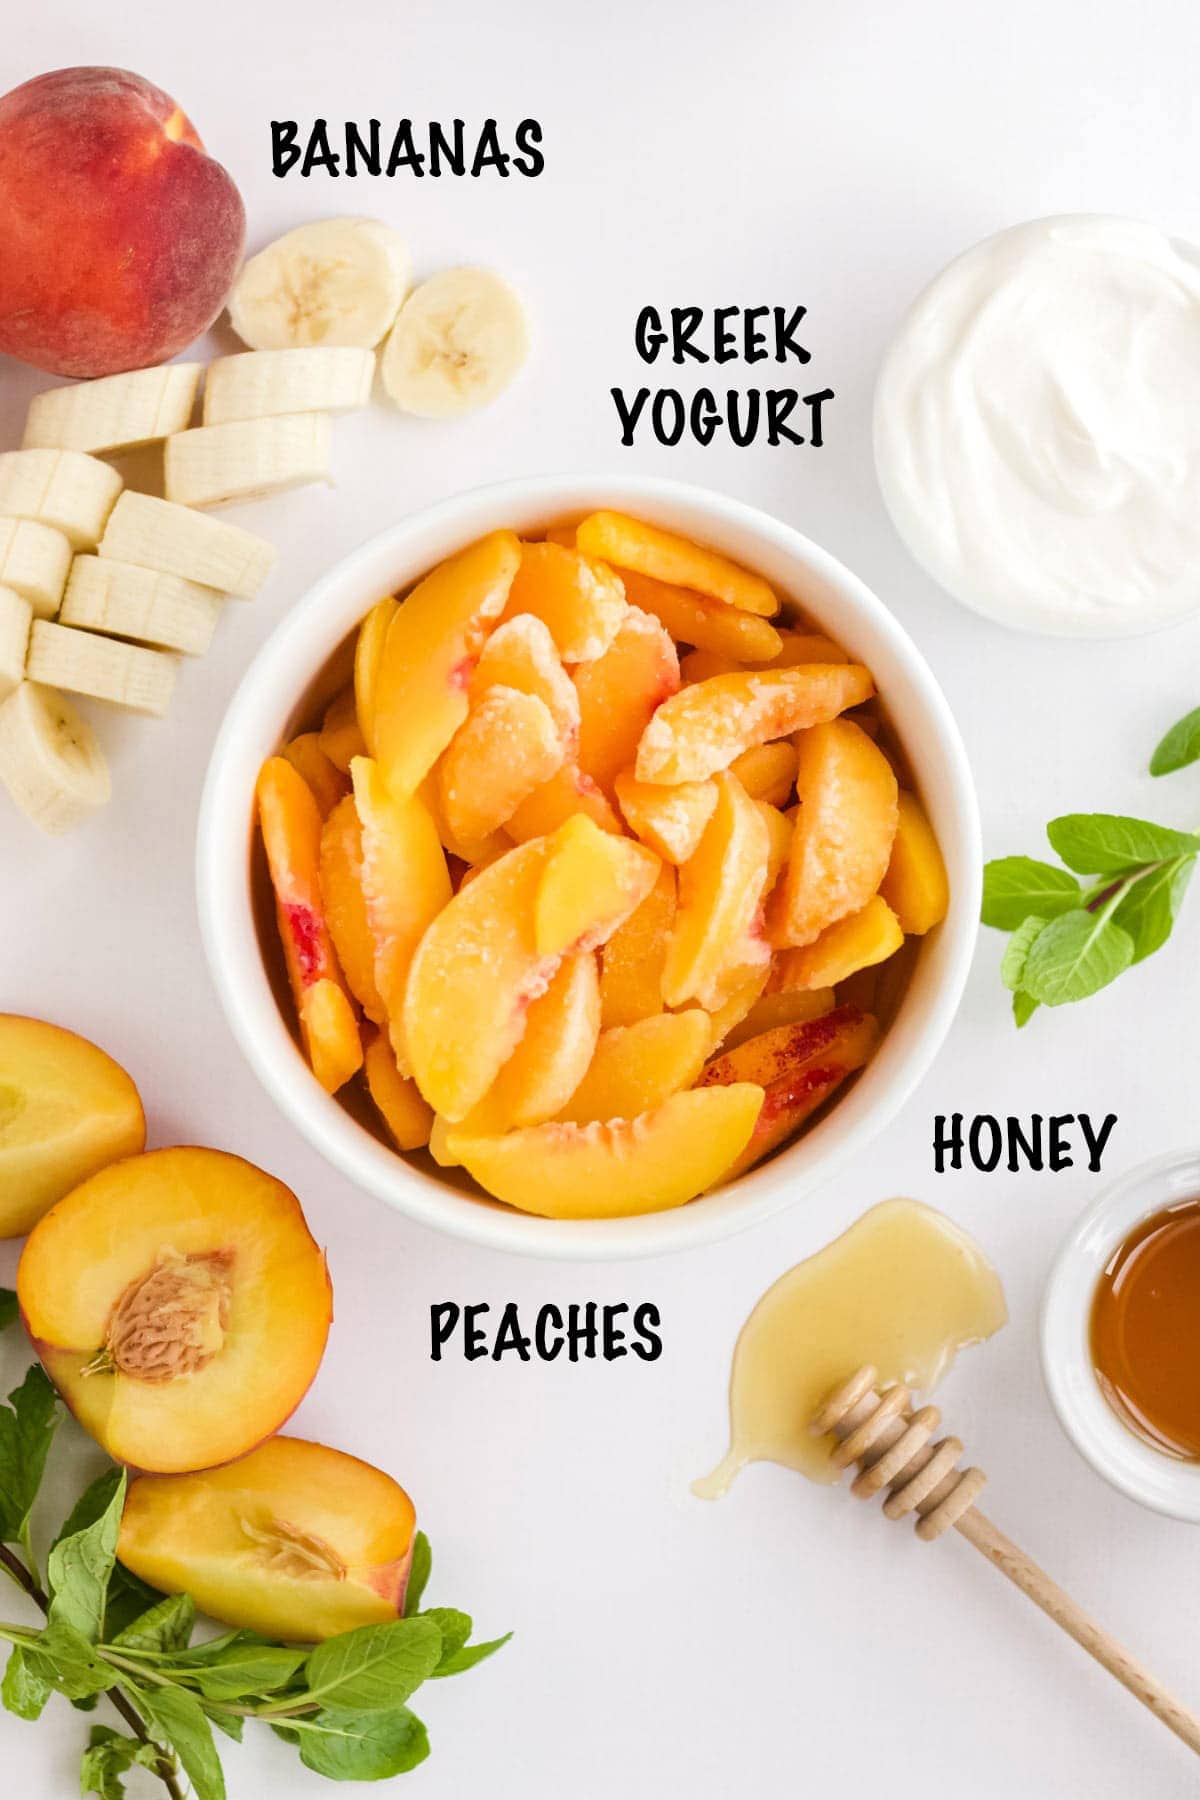 ingredients foe peach banana smoothie: peaches, banana, greek yogurt, honey, mint. Text describes the ingredients